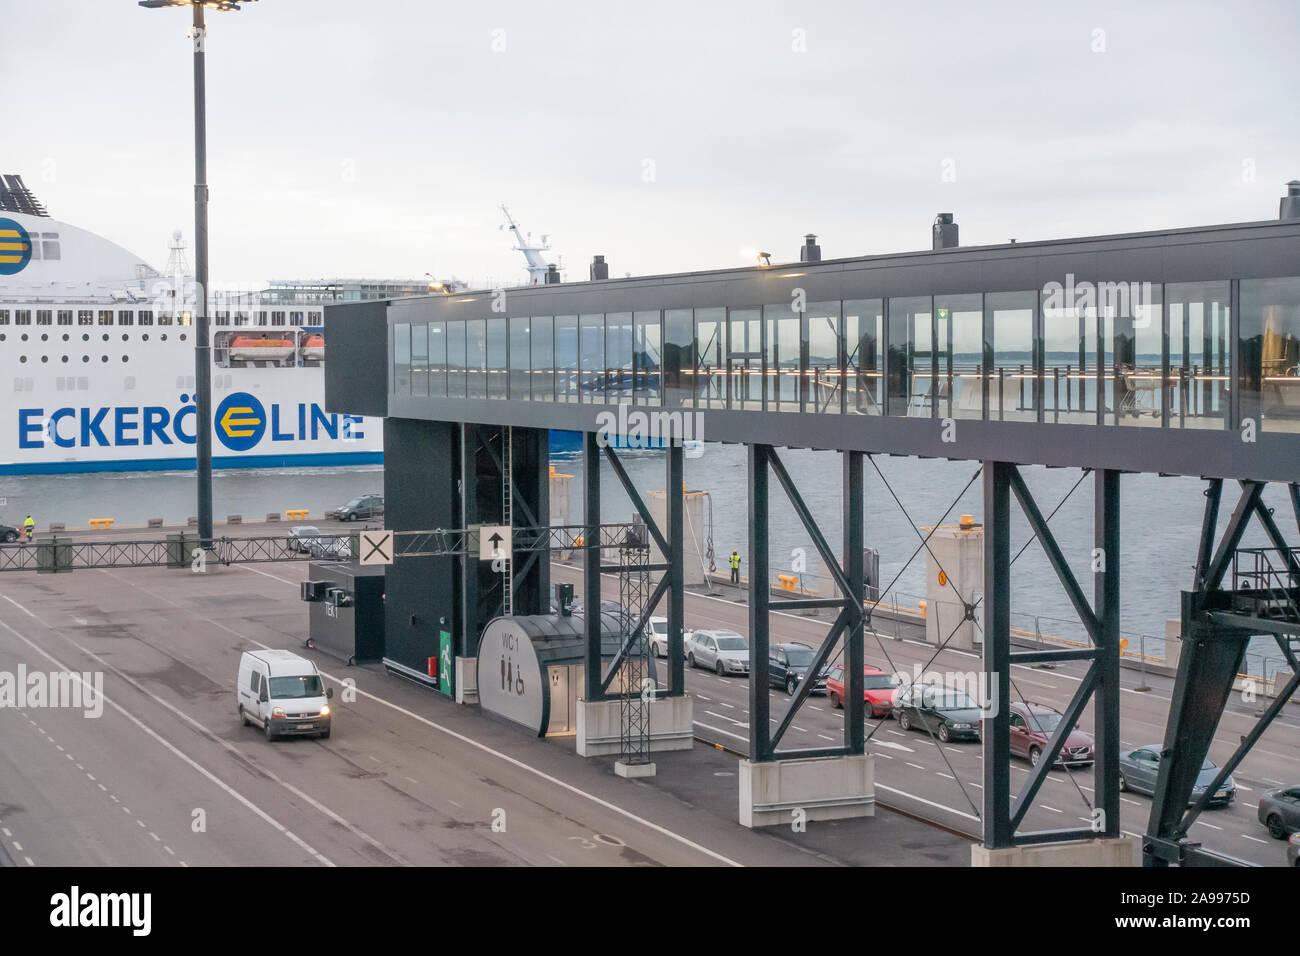 Eckerö line ferry from Tallinn approaching West terminal passenger terminal  in Helsinki Finland Stock Photo - Alamy